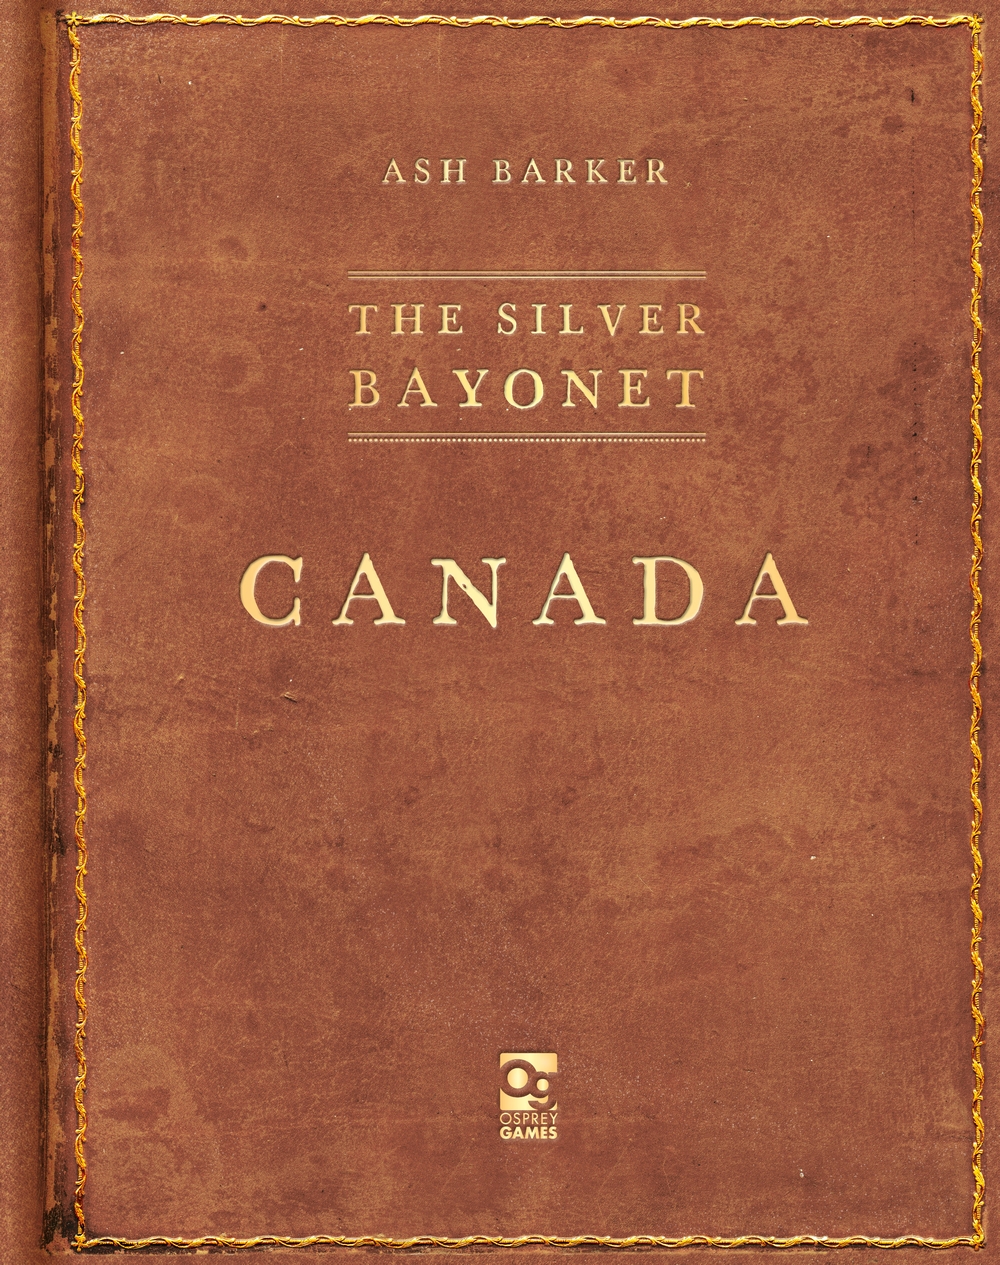 Silver Bayonet: Canada book jacket